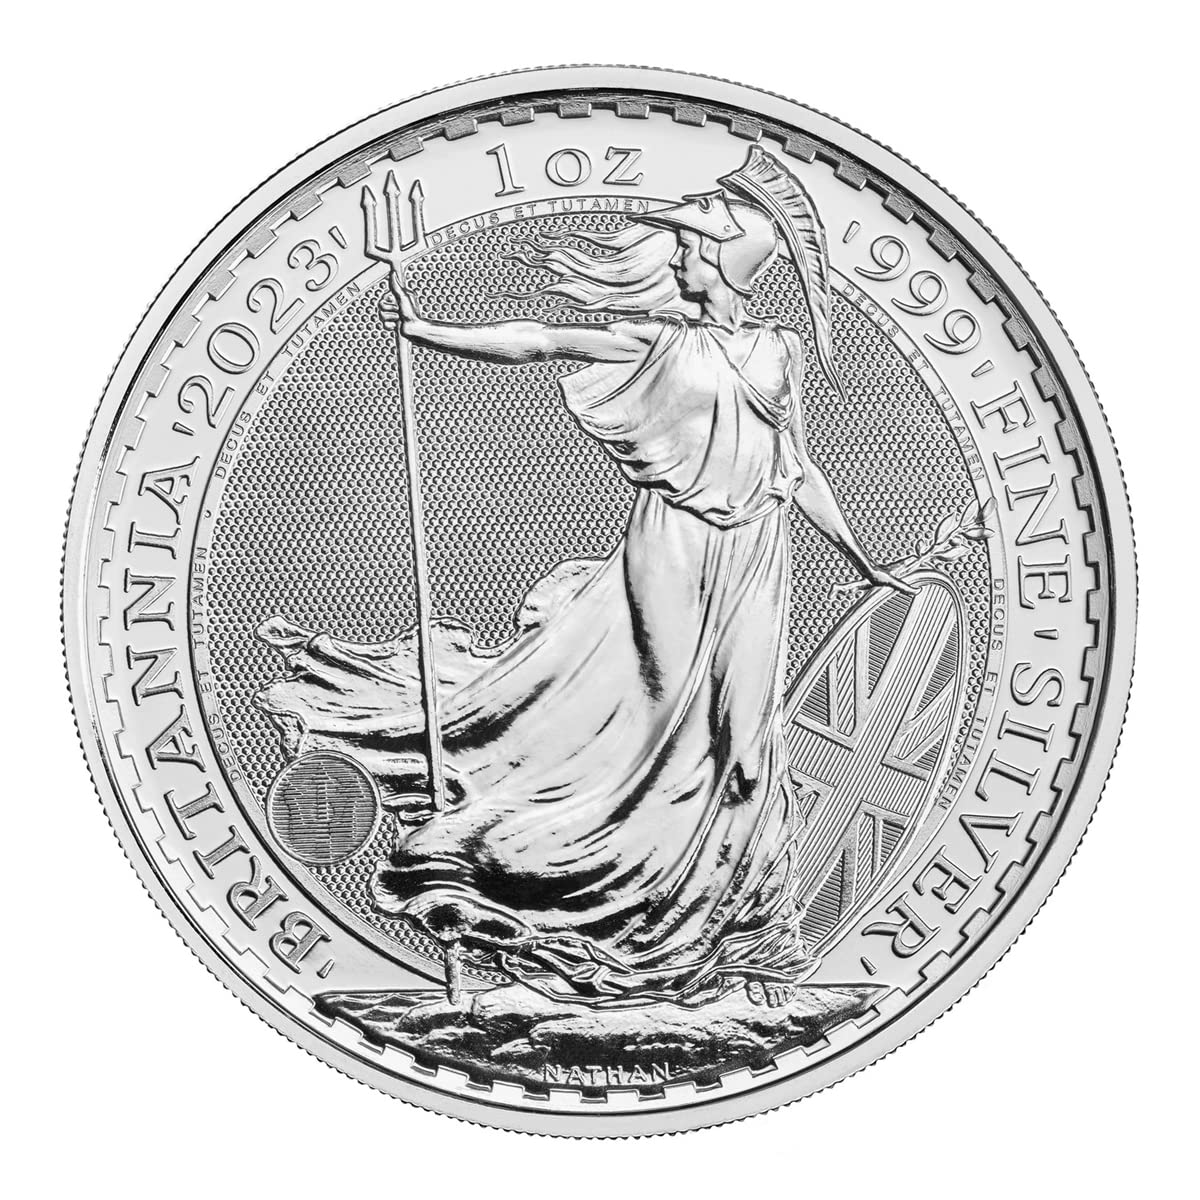 2023-1 oz British Silver Britannia Coin Brilliant - Queen Elizabeth II on Obverse Pound Seller Uncirculated